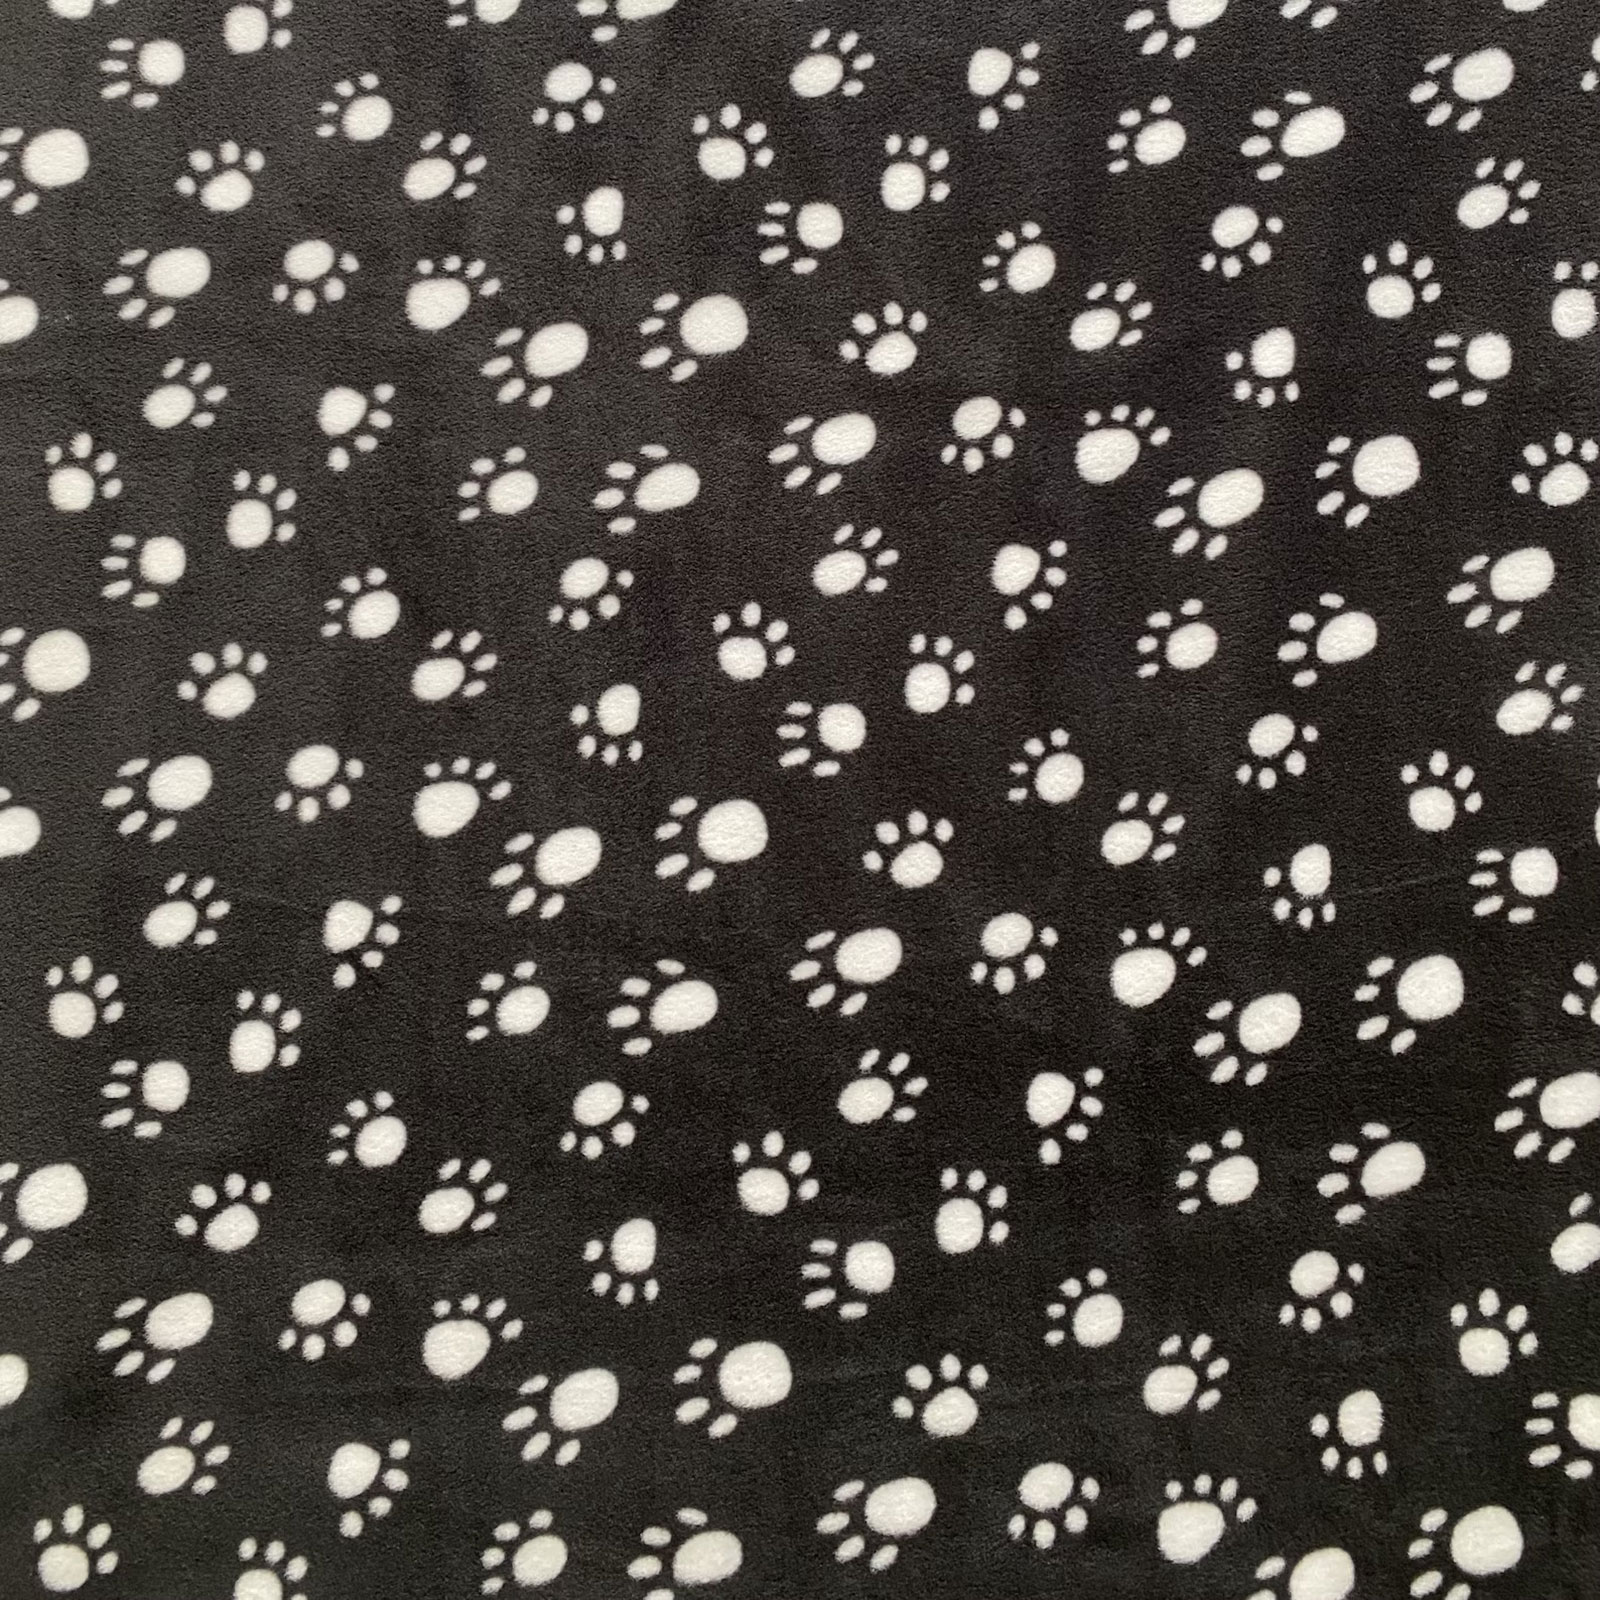 White Paws Fleece Fabric with Black